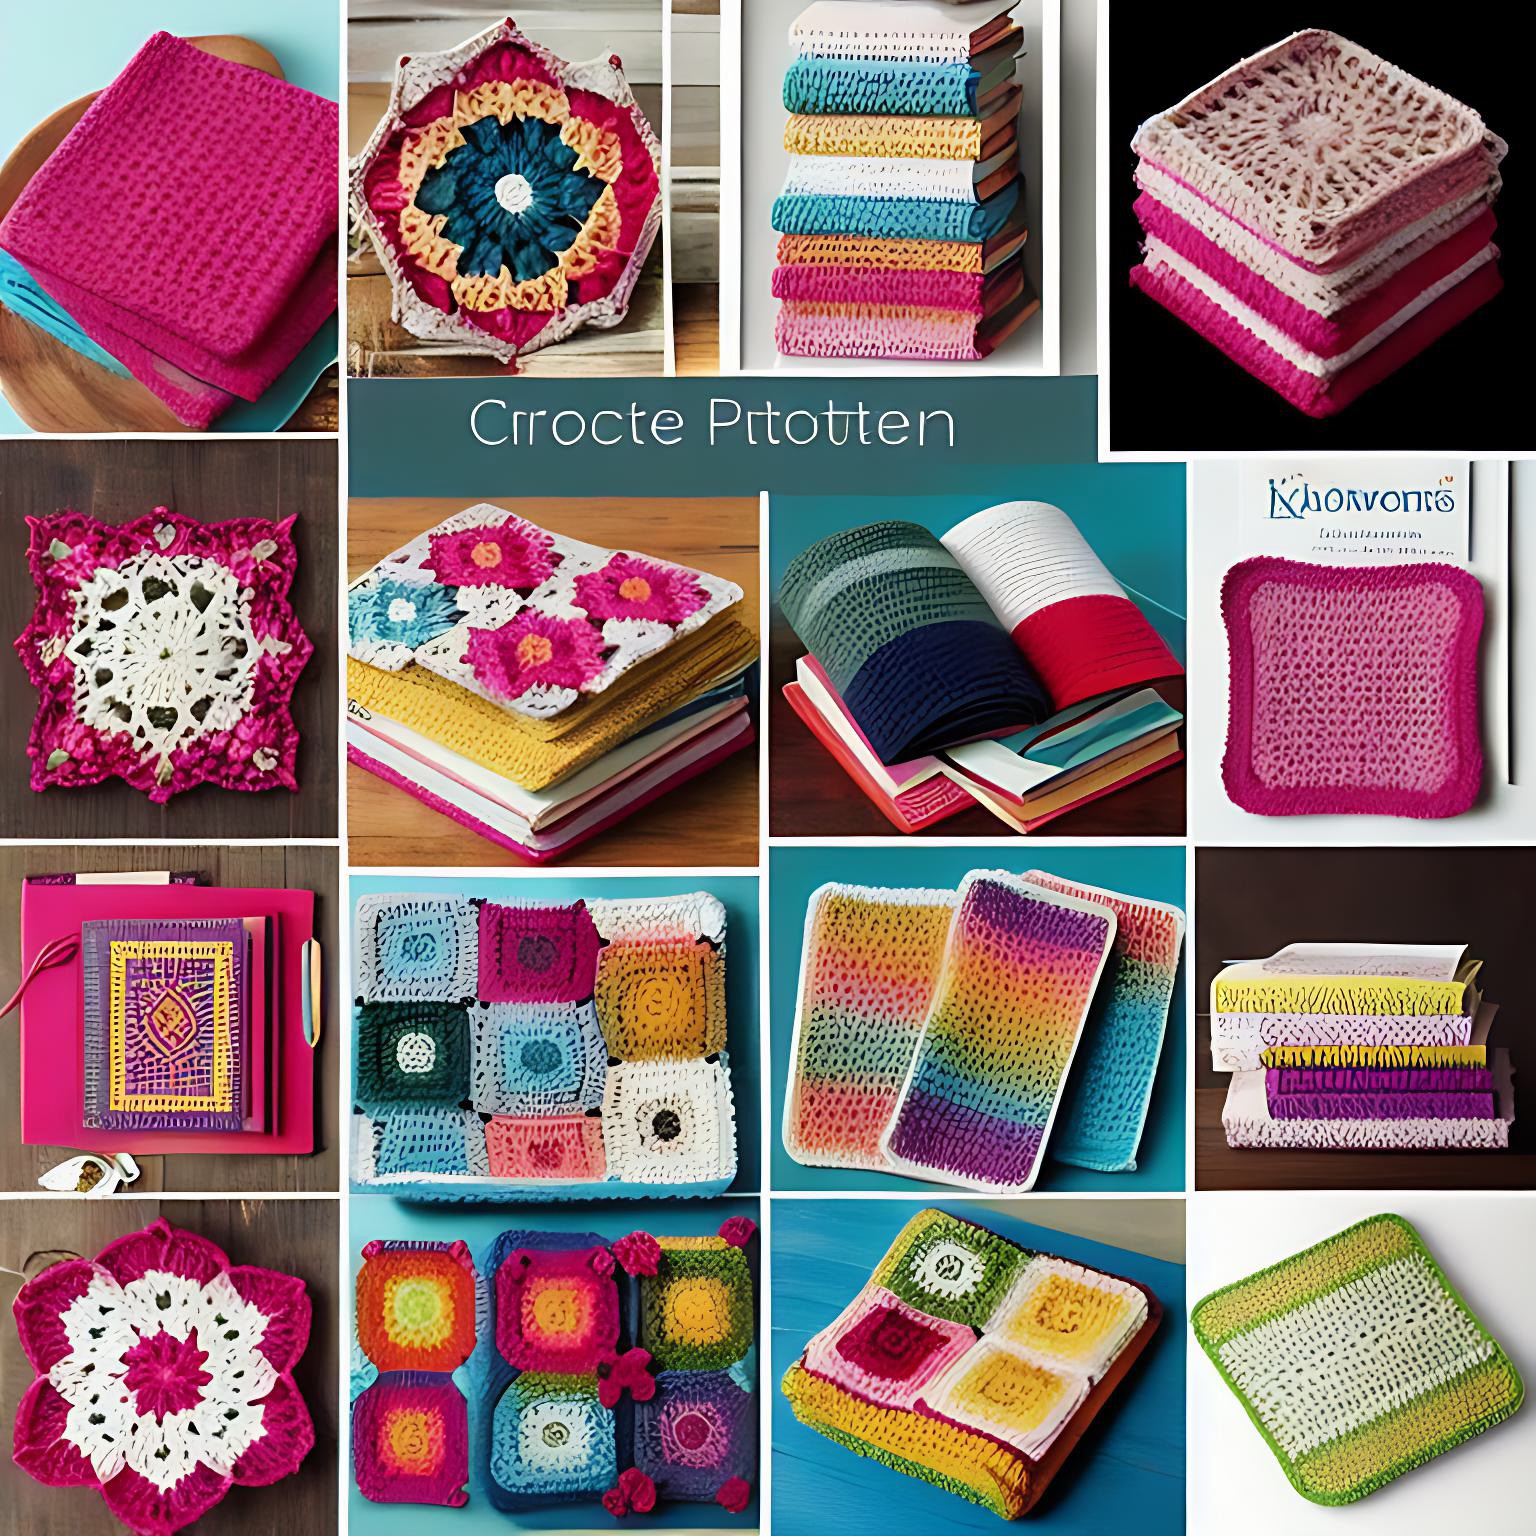 crochet patterns books